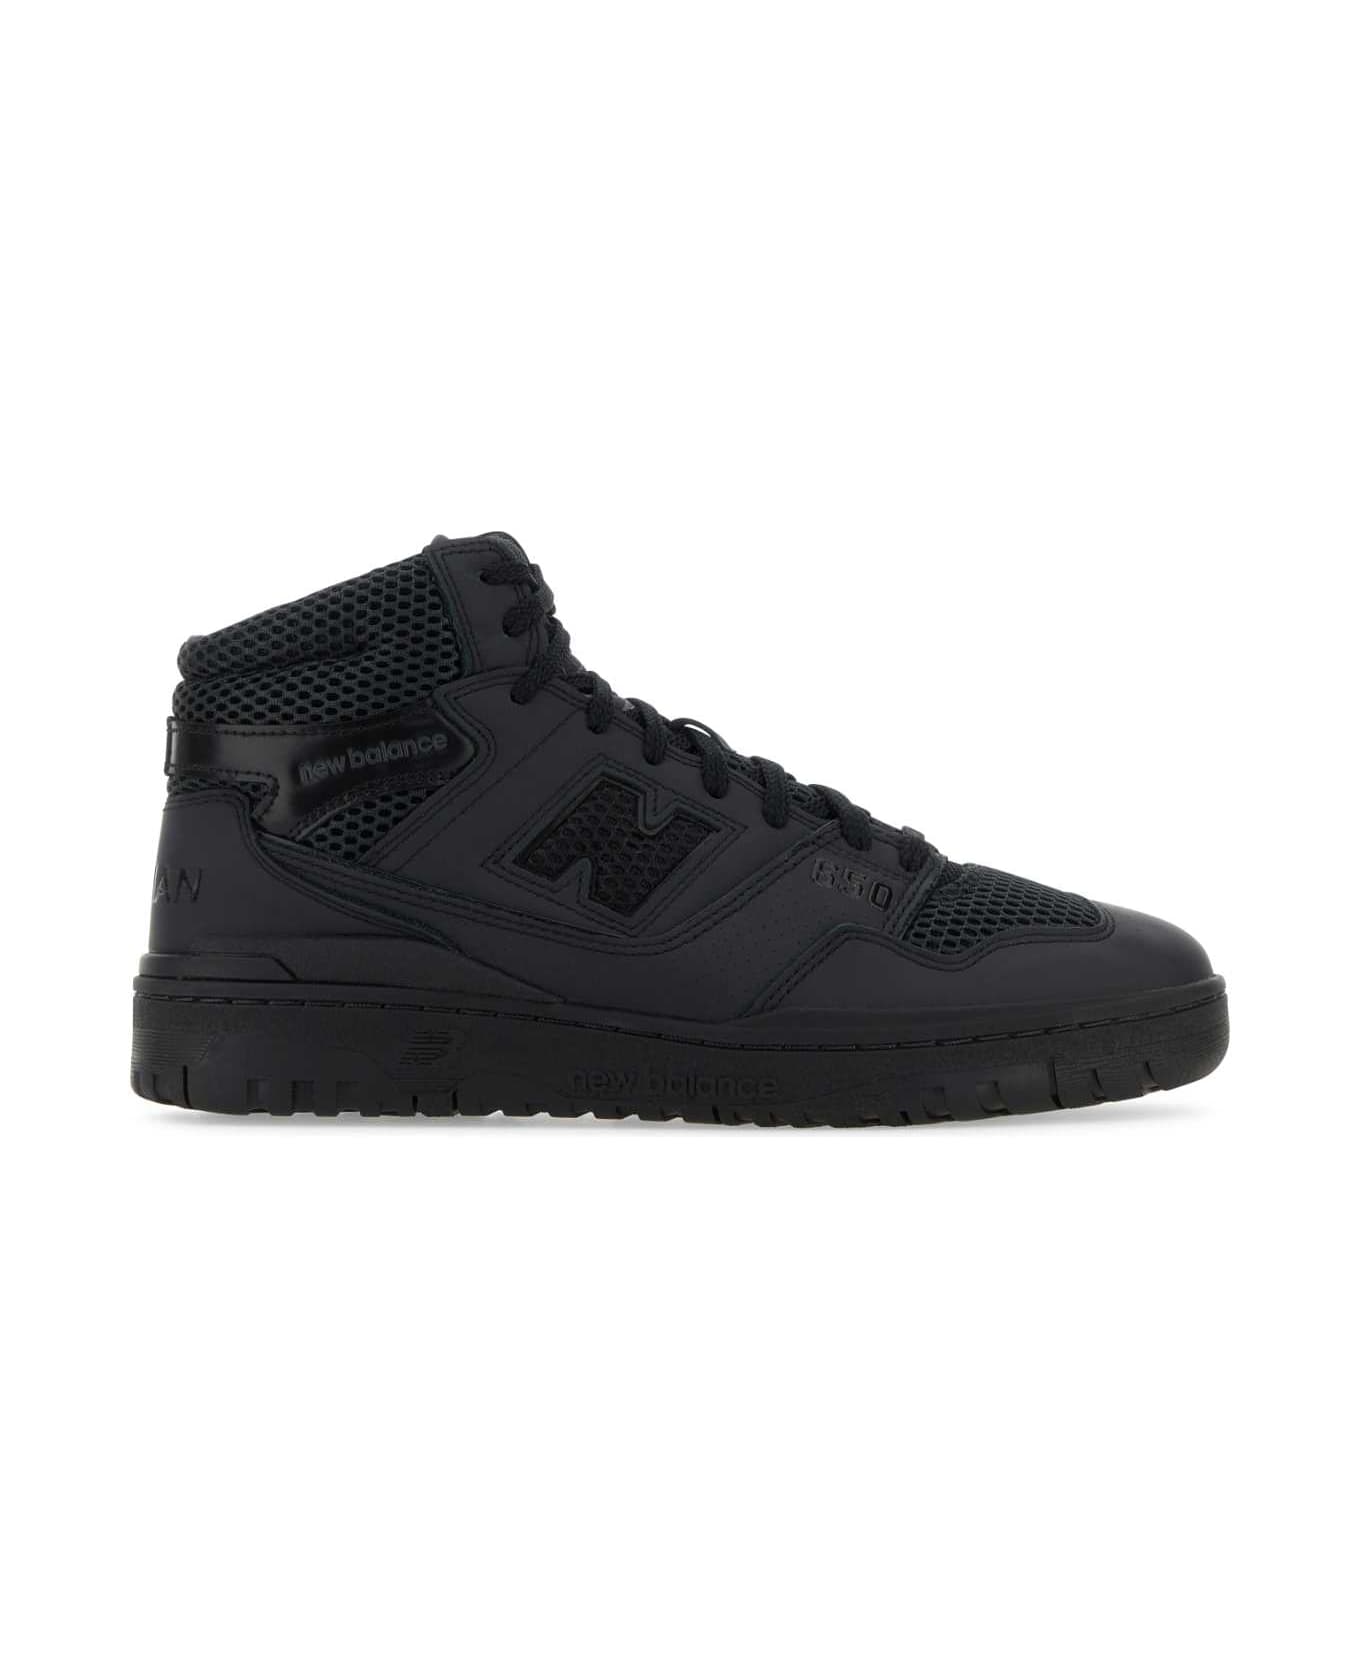 Junya Watanabe Black Leather And Mesh Junya Watanabe X New Balance Bb650 Sneakers - BLACKBLACK